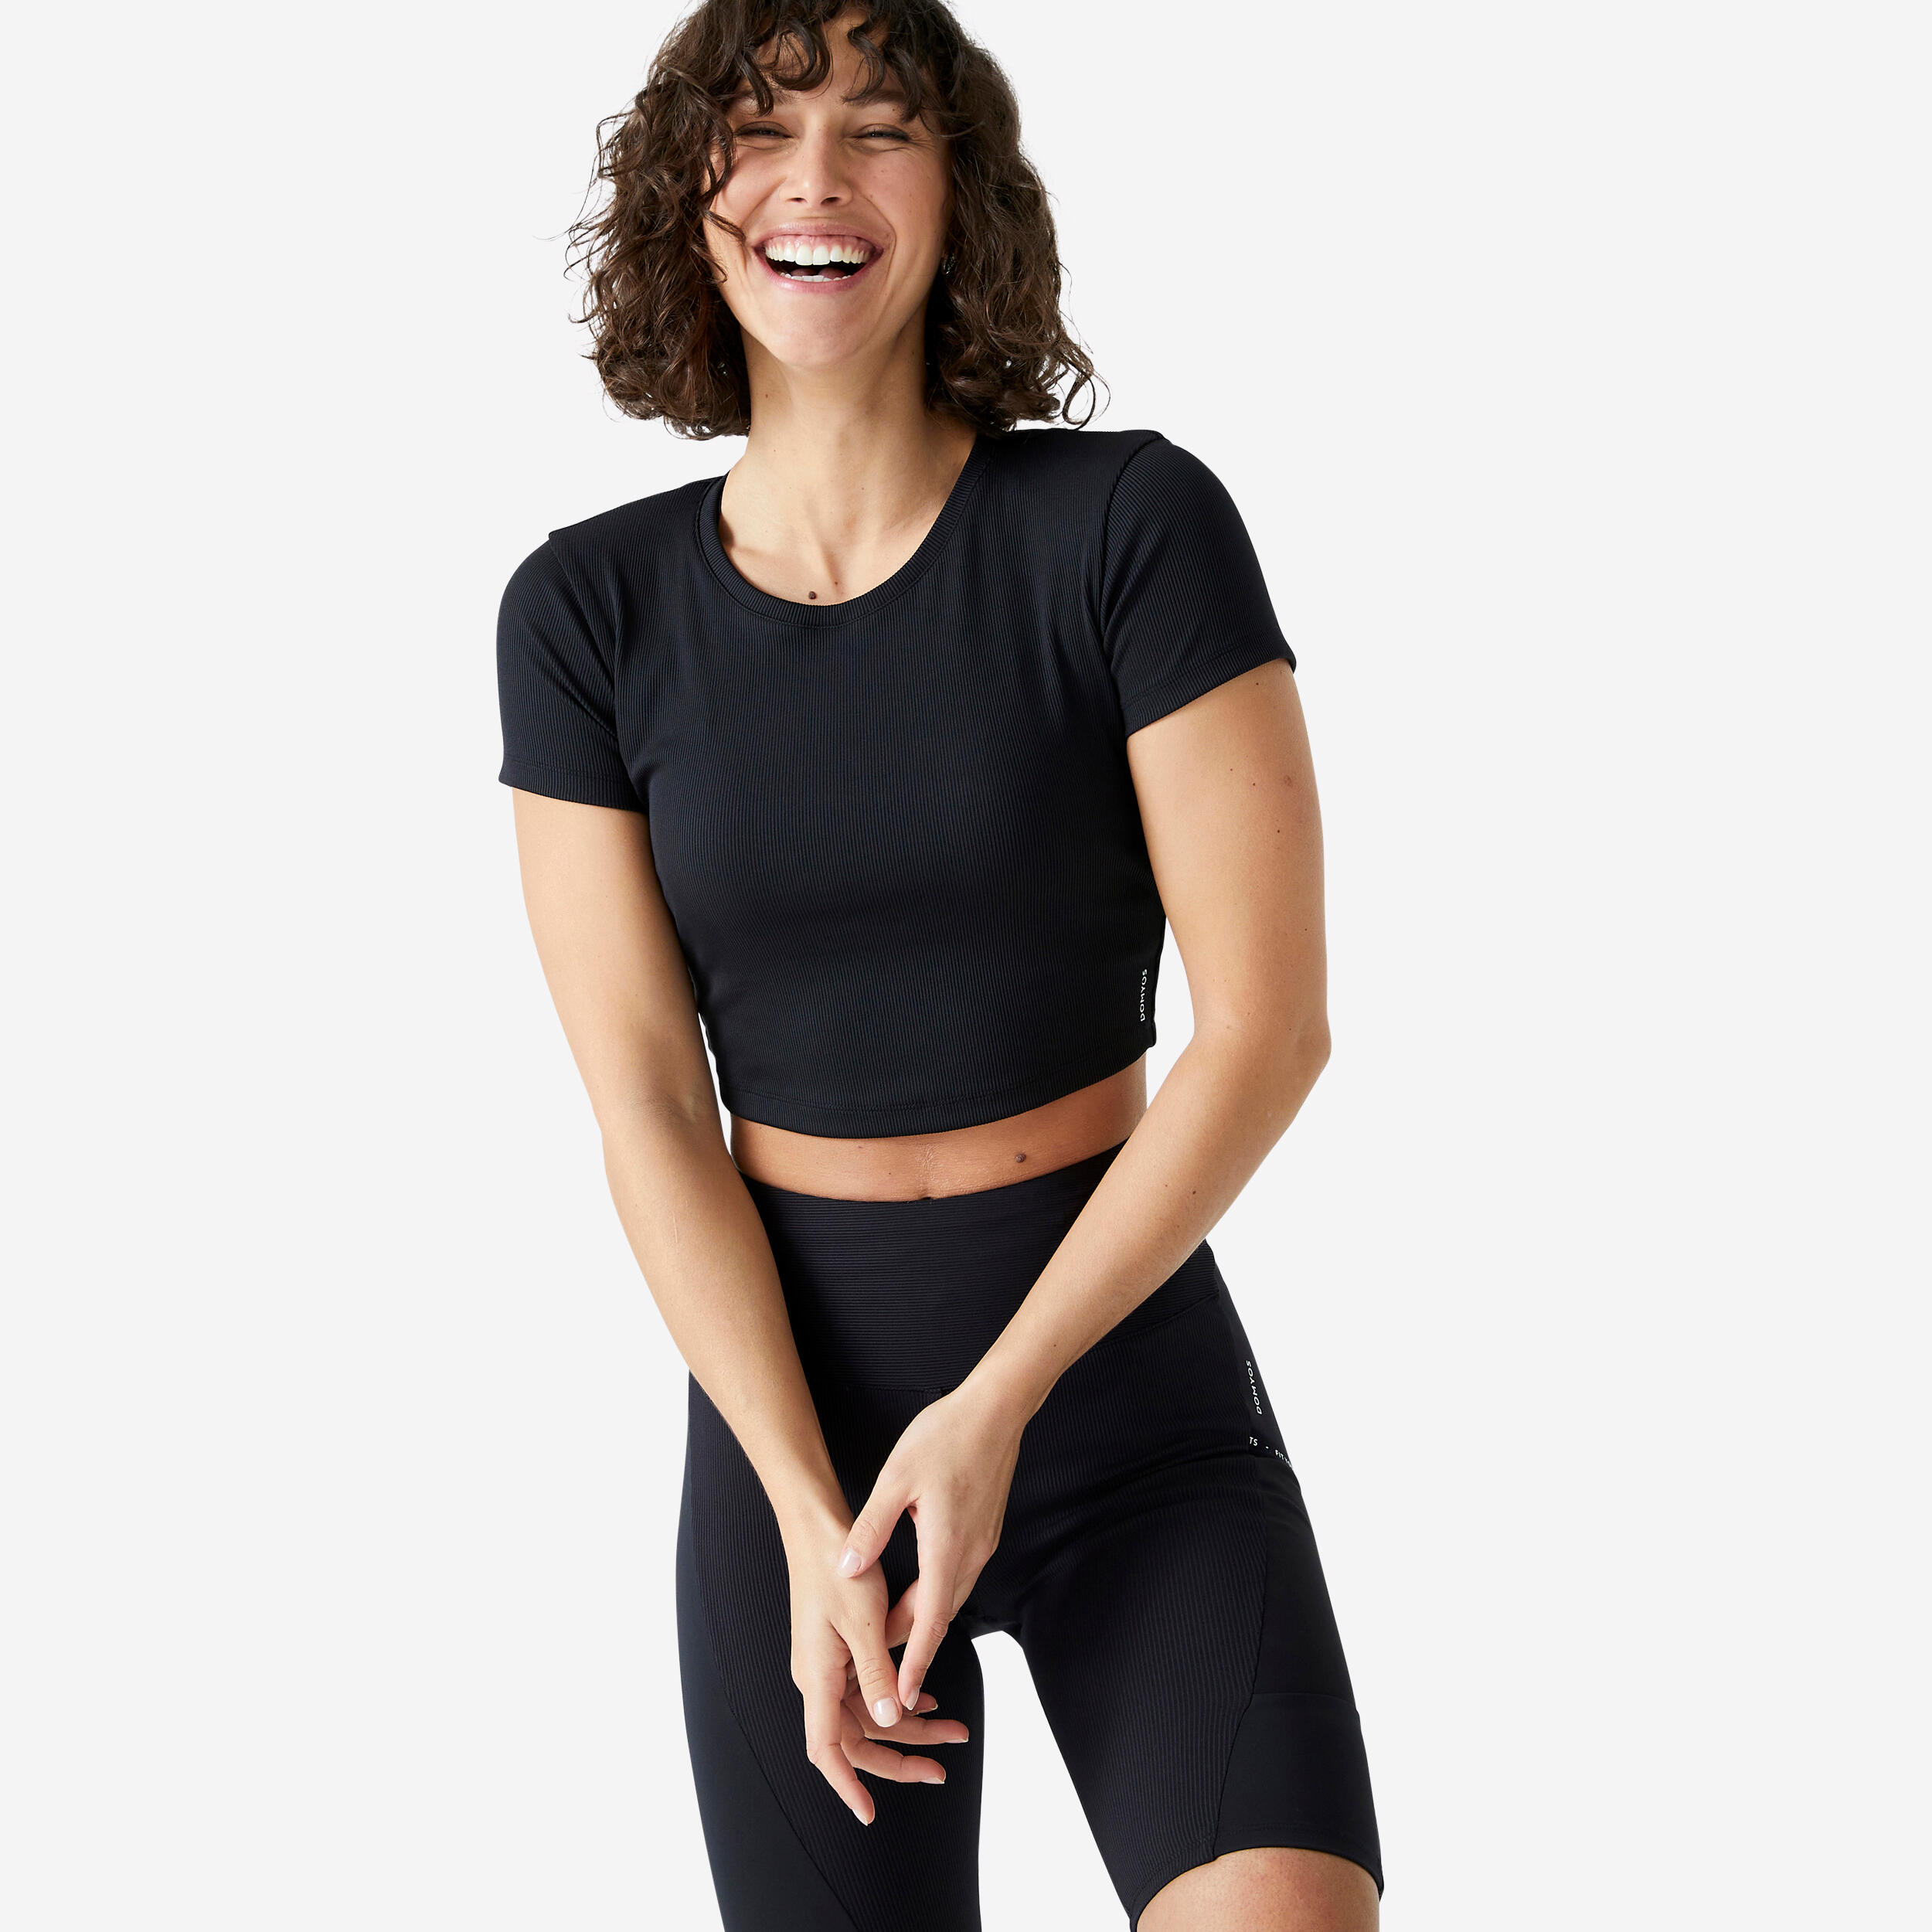 DOMYOS Women's Fitness Cardio Short-Sleeved Cropped T-Shirt - Black